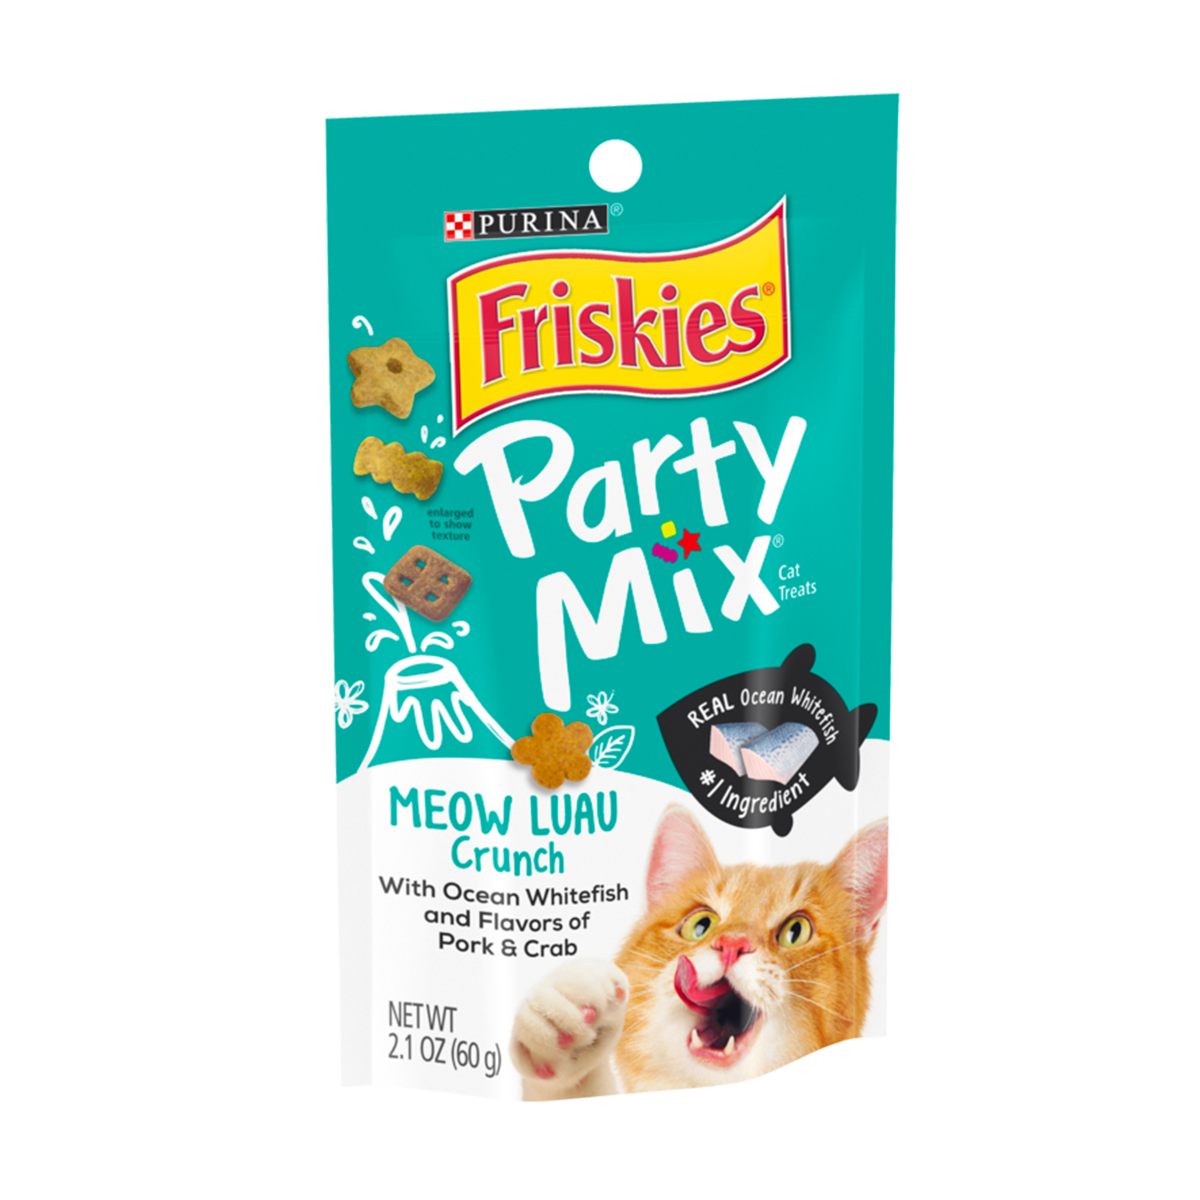 purina-friskies-party-mix-meow-luau-crunch.png